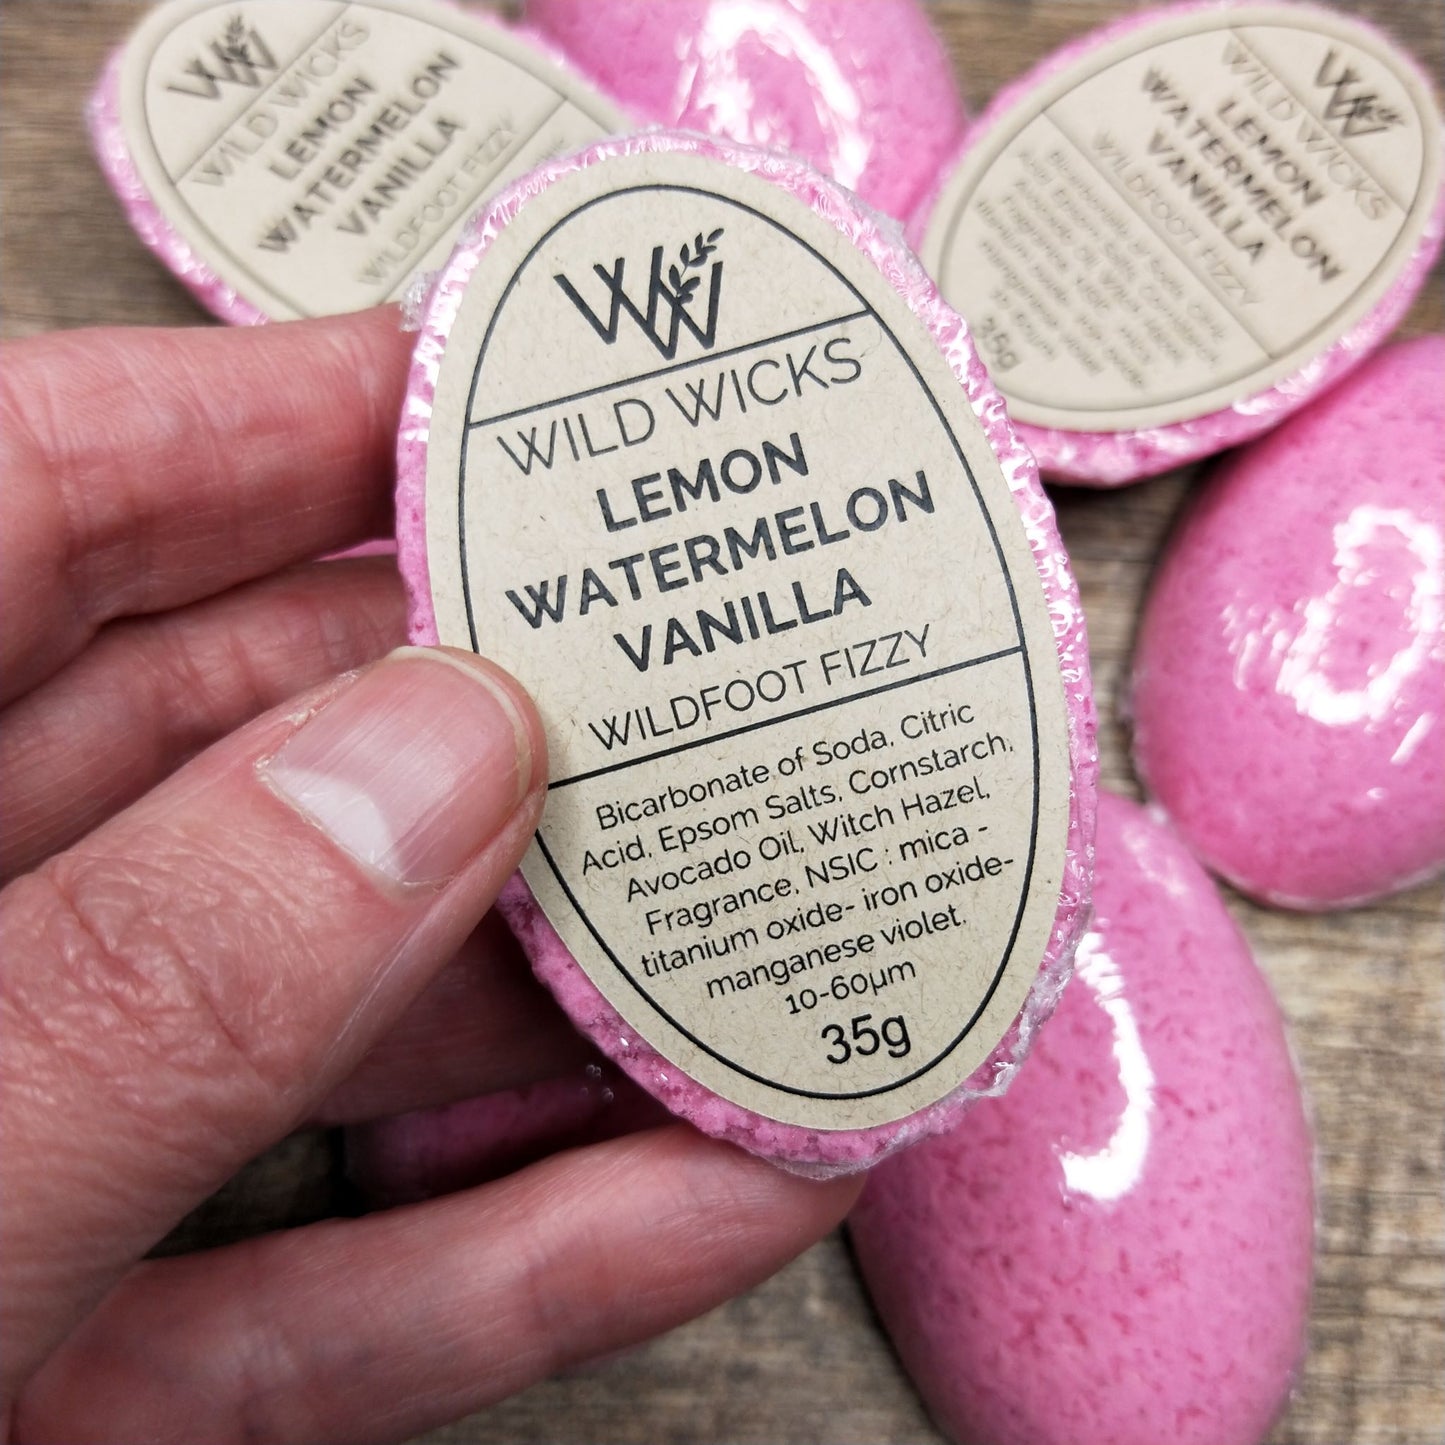 Wildfoot Fizzy Lemon - Watermelon - Vanilla